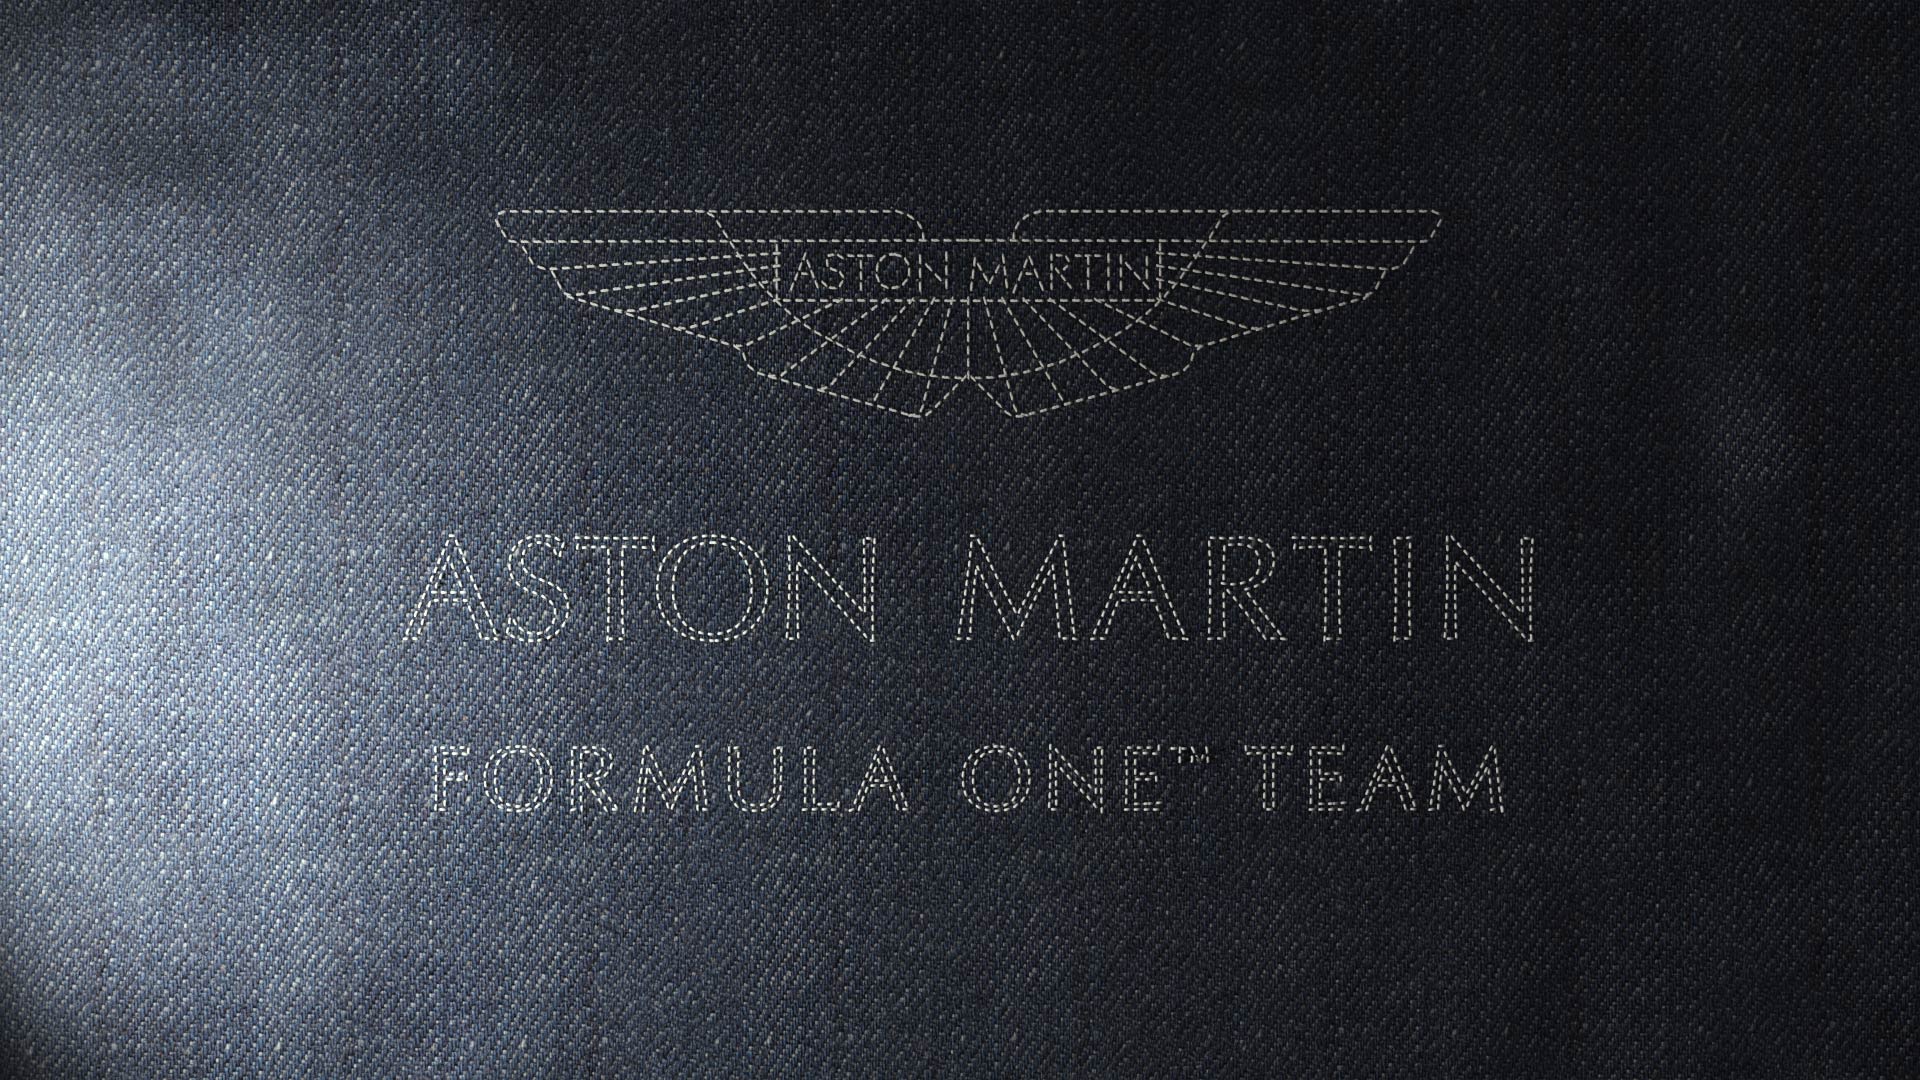 Aston martin Cognizant F1 logo